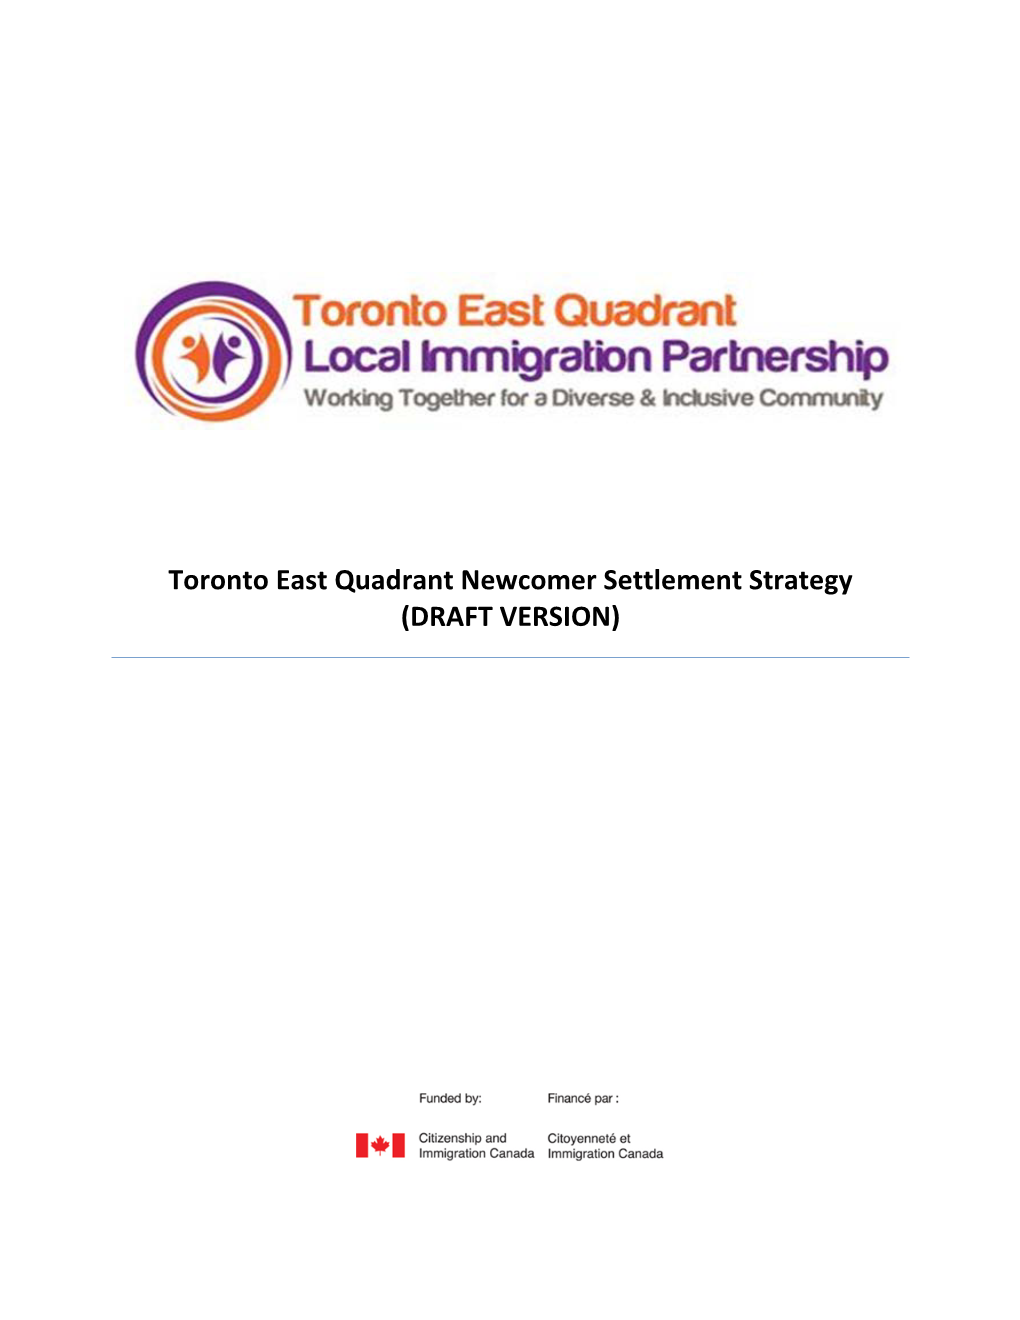 Toronto East Quadrant Newcomer Settlement Strategy (DRAFT VERSION)